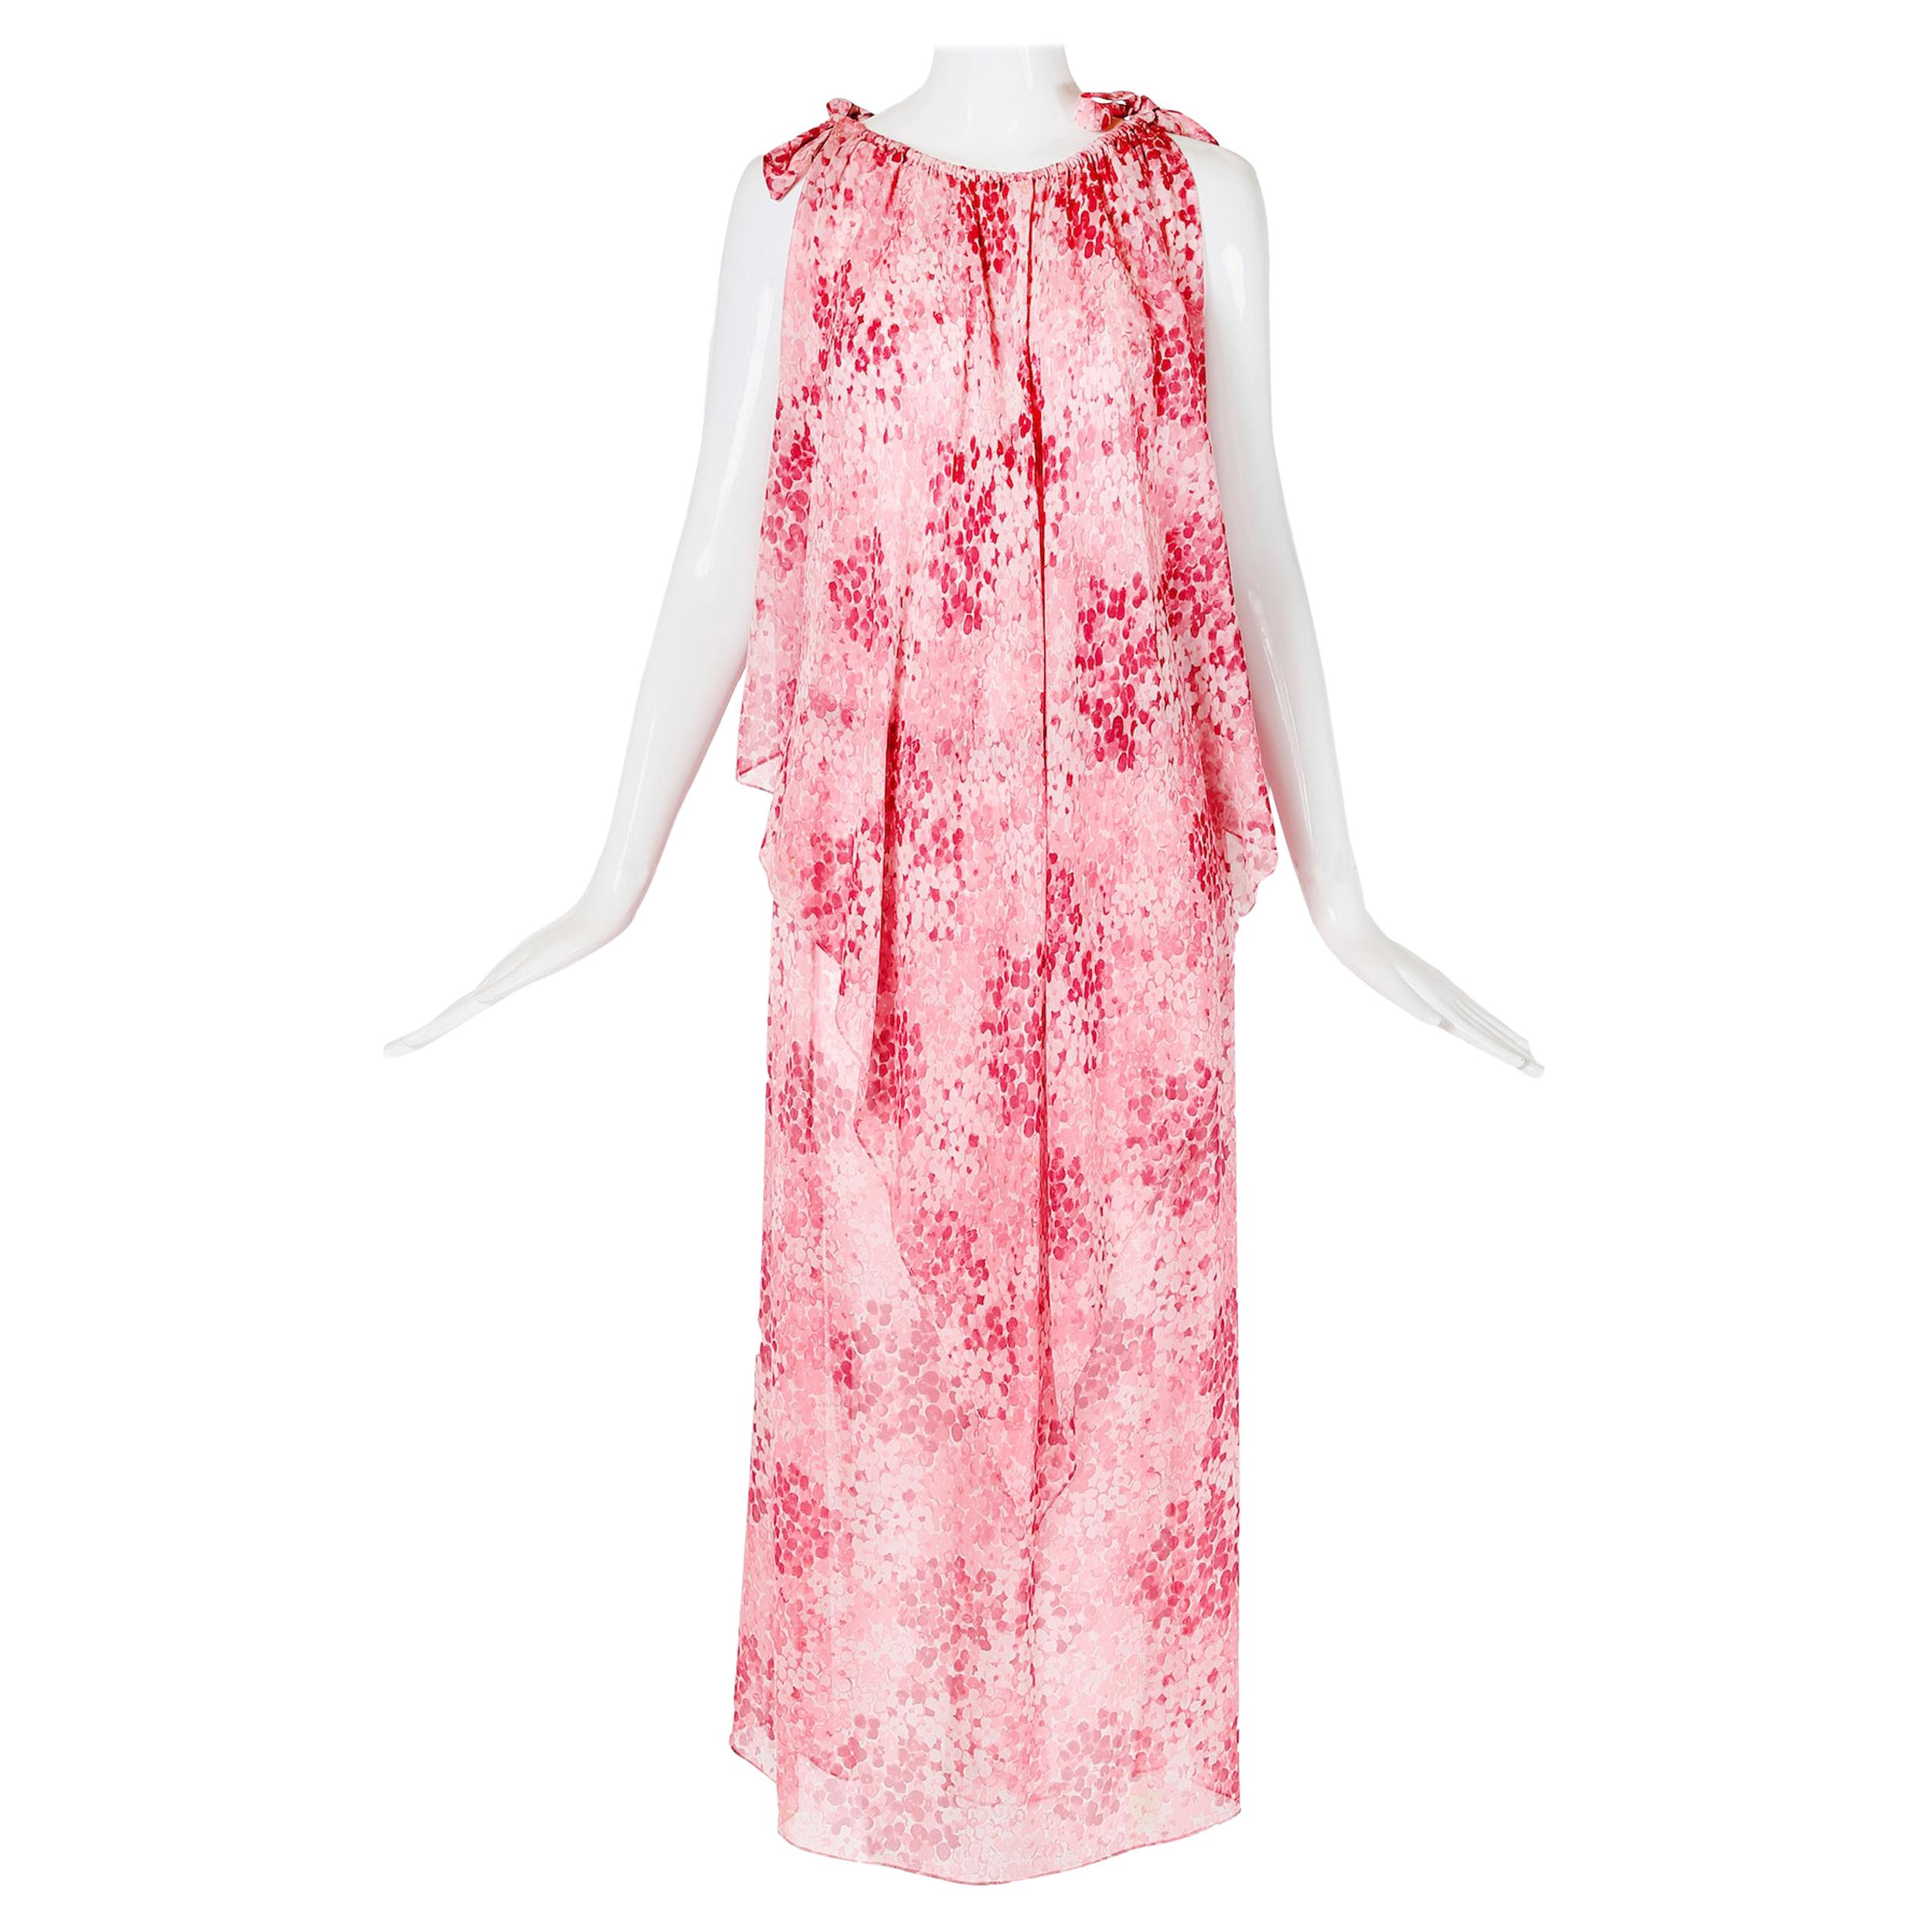 Yves Saint Laurent Floral Print Chiffon Layered Sleeveless Tunic-Style Dress